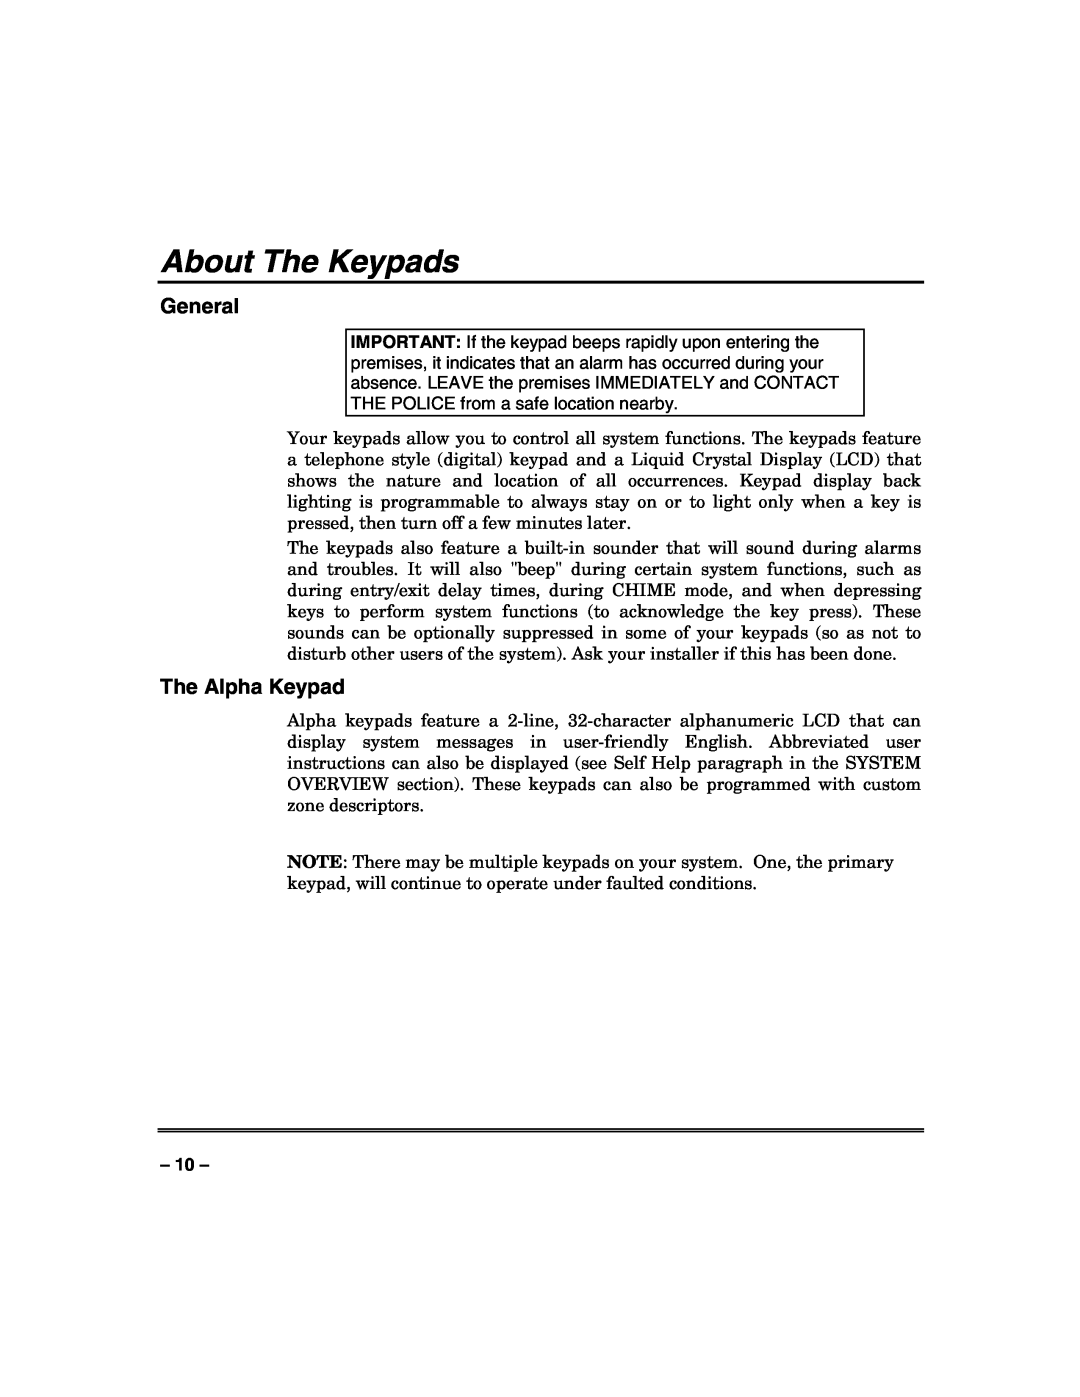 Honeywell VISTA-250FBP, VISTA-128FBP manual About The Keypads, The Alpha Keypad, General 